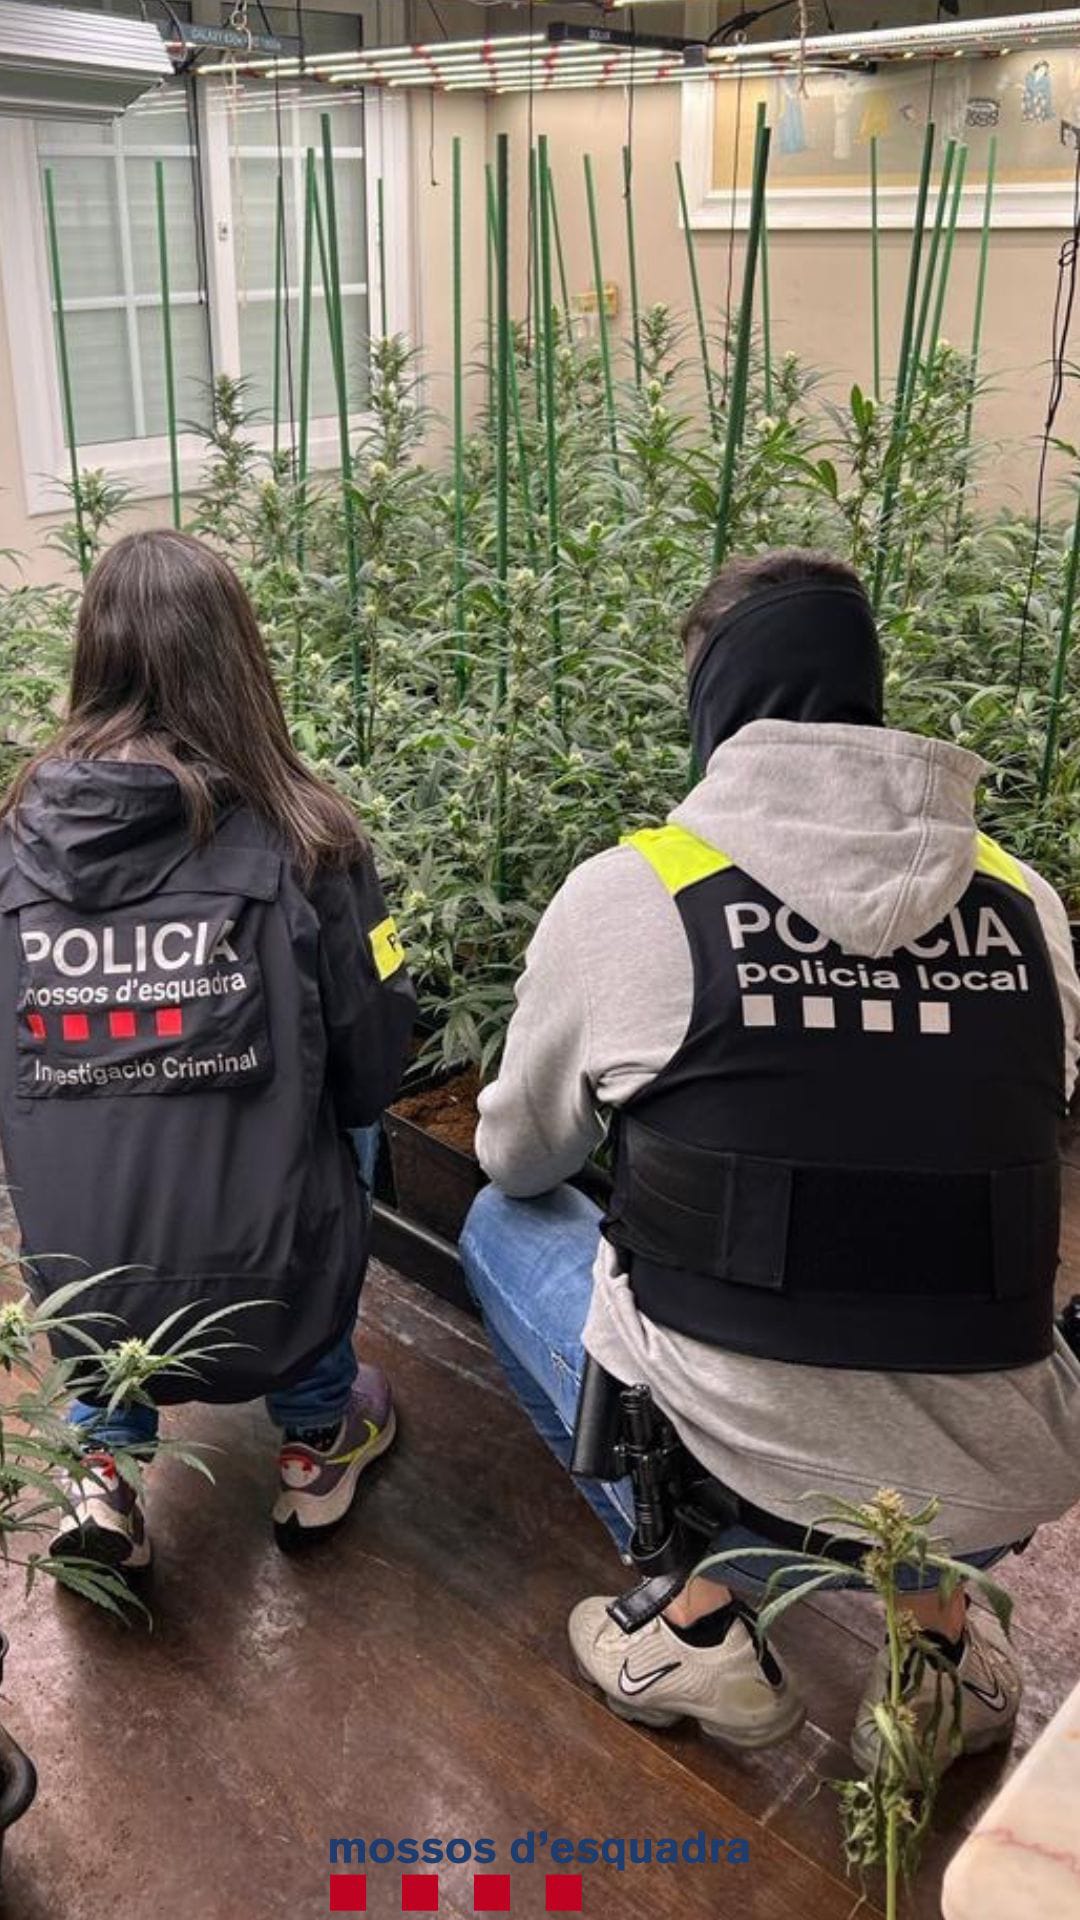 Operació mossos i policia local